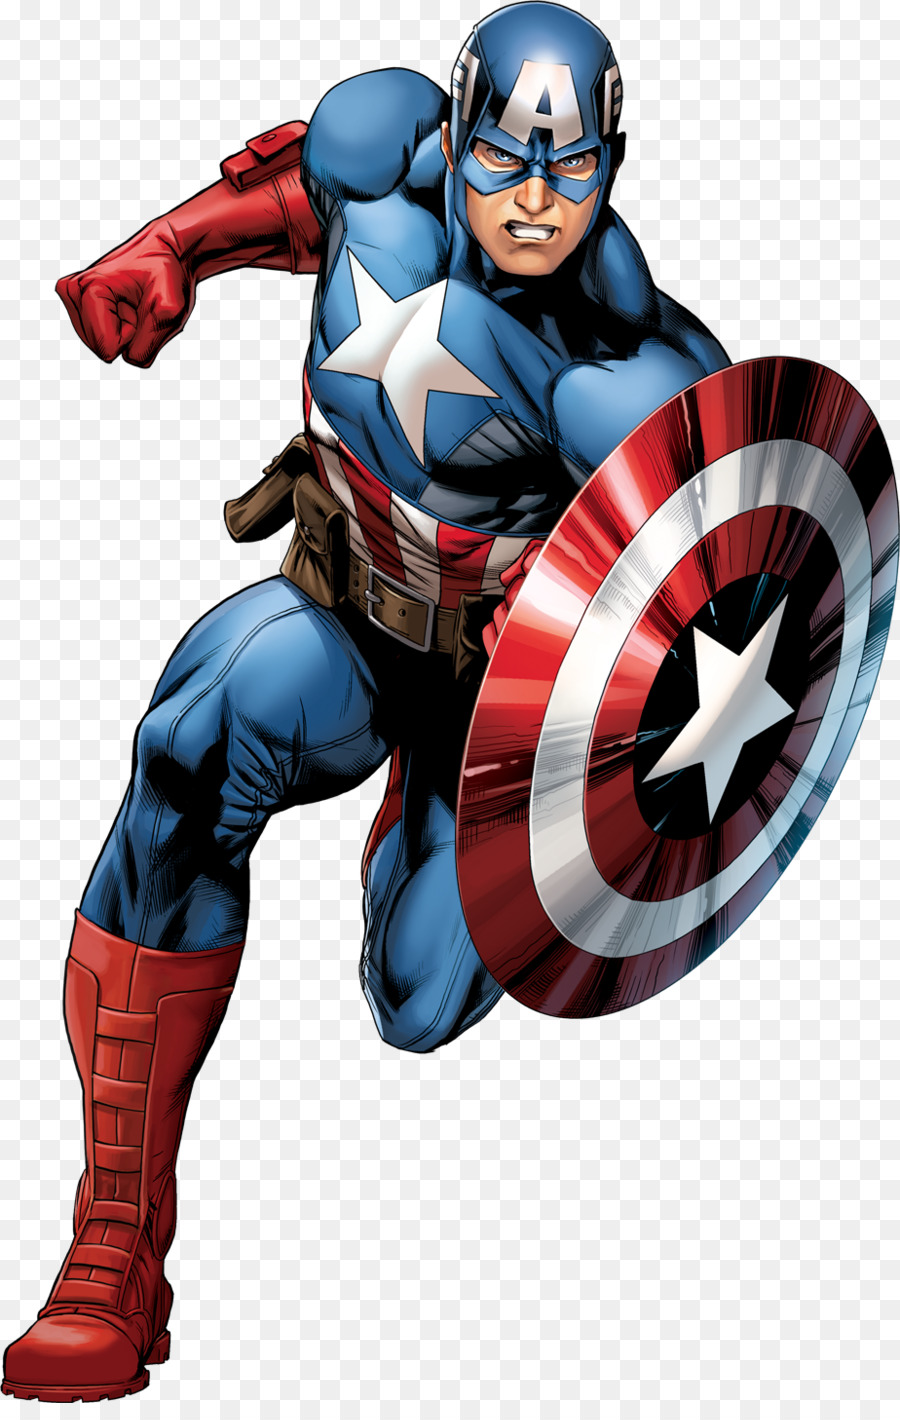 Captain America Spider-Man Iron Man The Avengers Carol Danvers - superhero png download - 924*1440 - Free Transparent Captain America png Download.